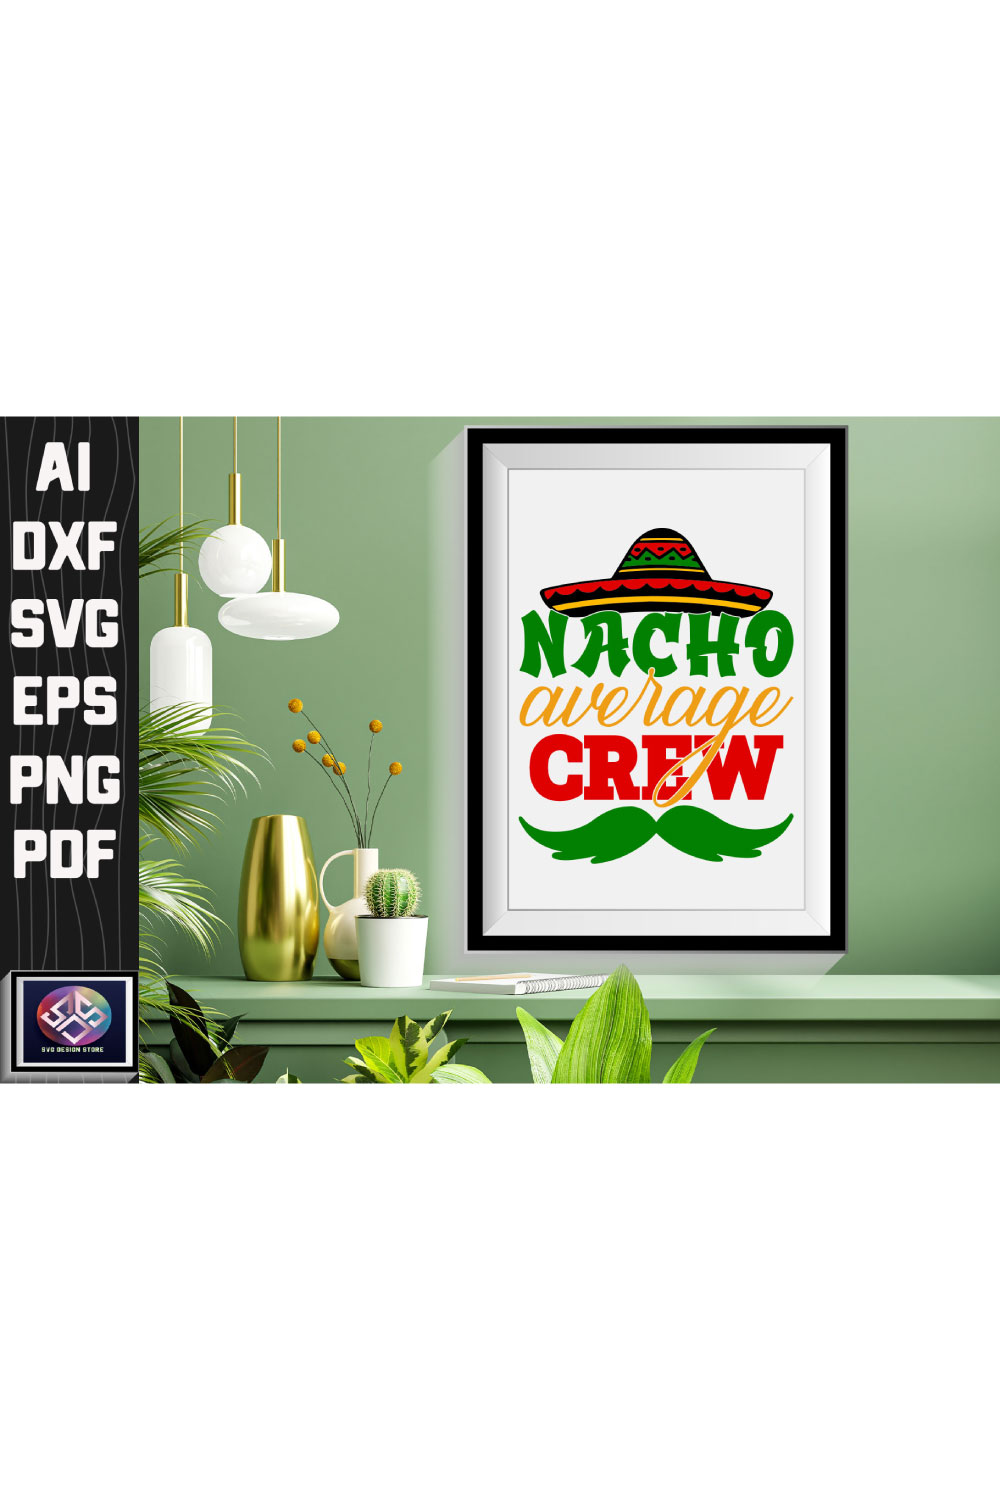 Nacho Average Crew pinterest preview image.